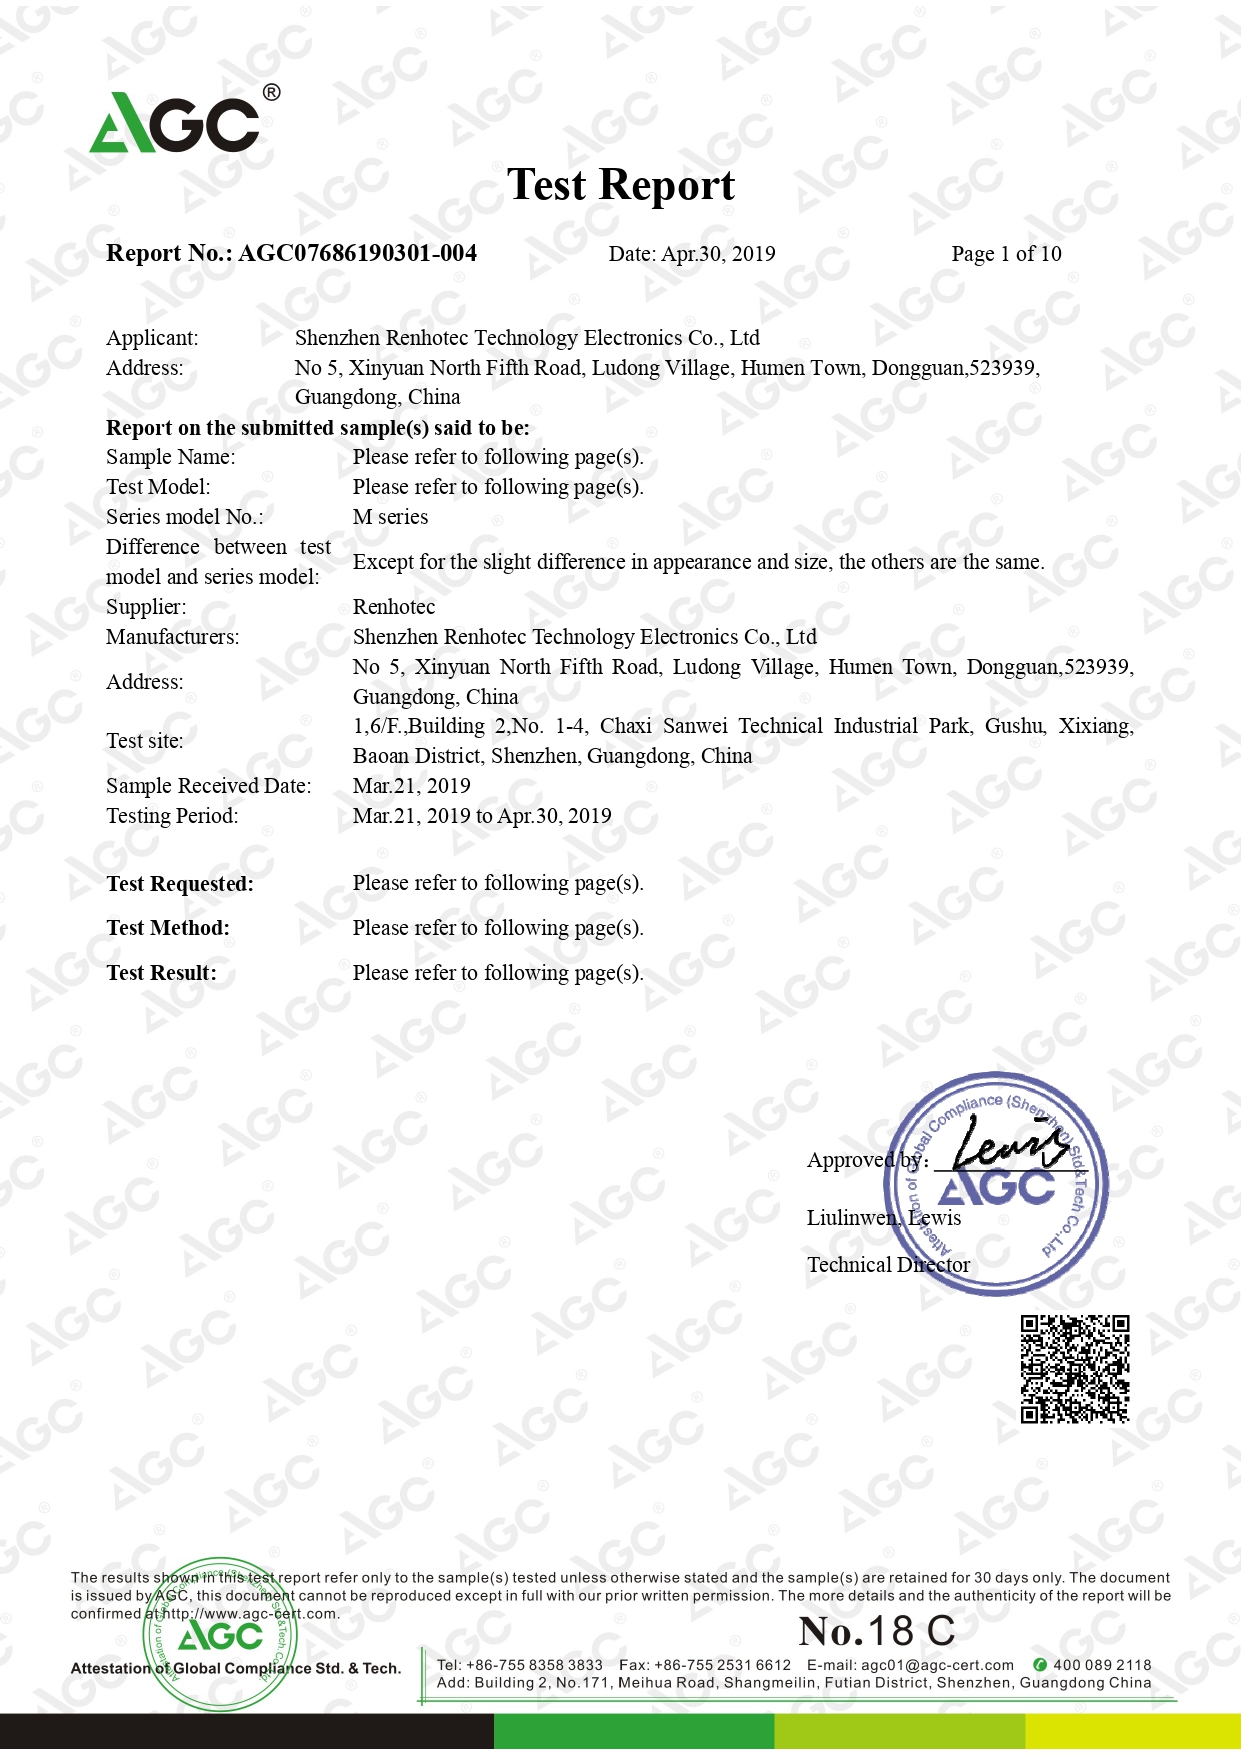 AGC07686190301-004-ROHS Certificate - M Series